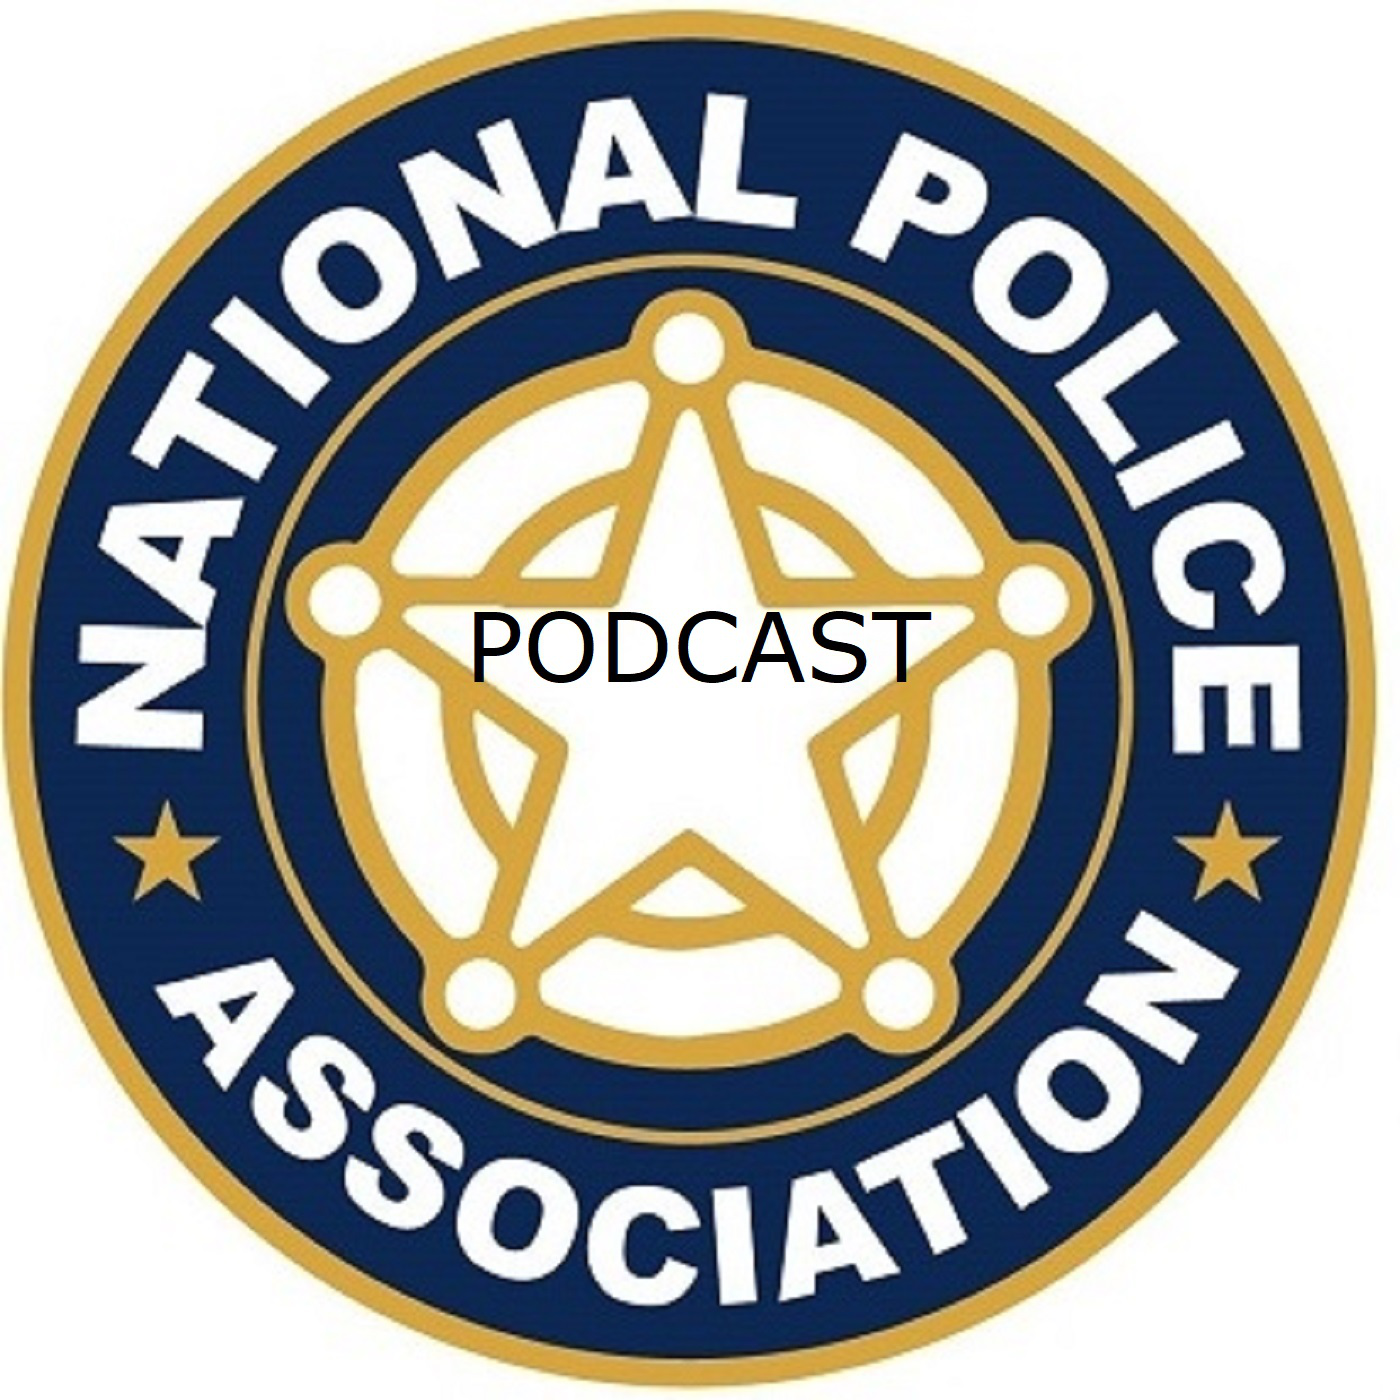 National Police Association Podcast